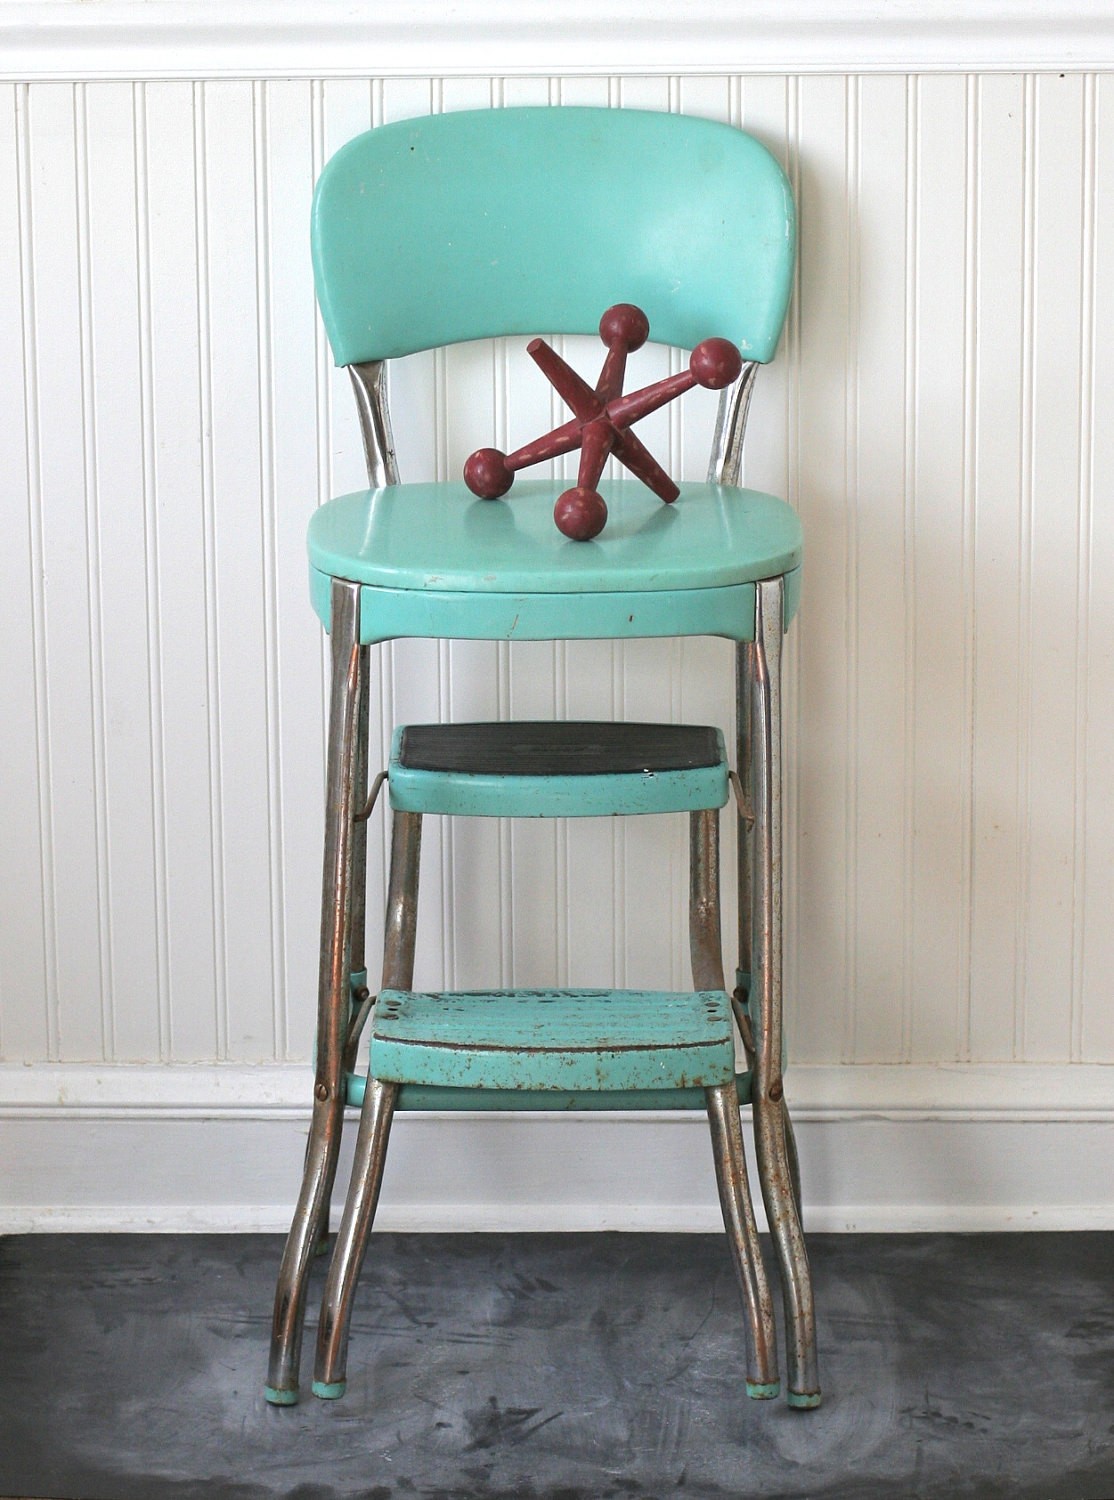 Circa 1950s cosco fold out step stool